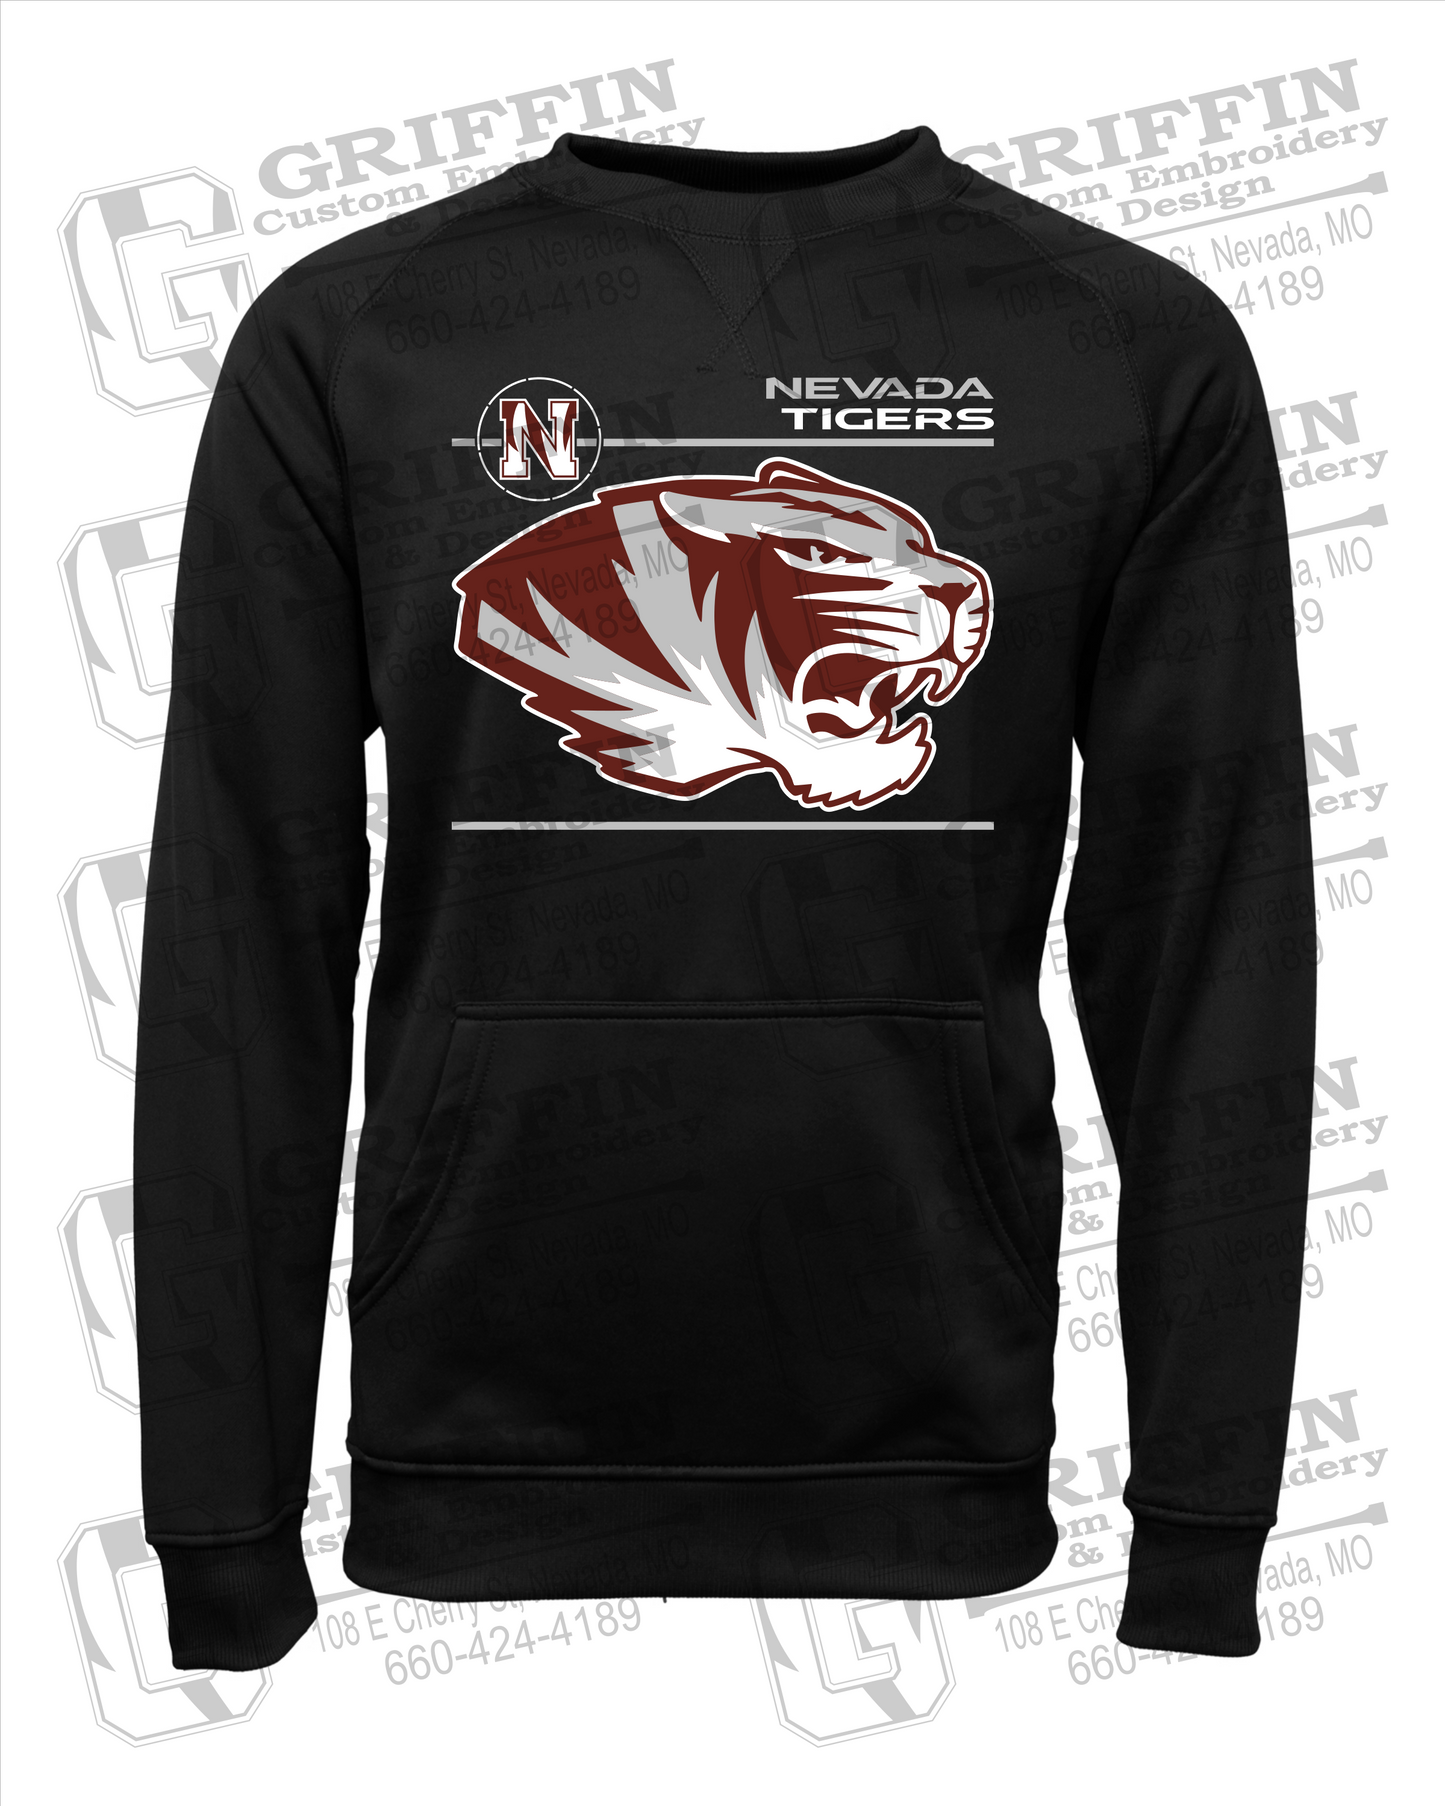 Nevada Tigers 22-D Sweatshirt